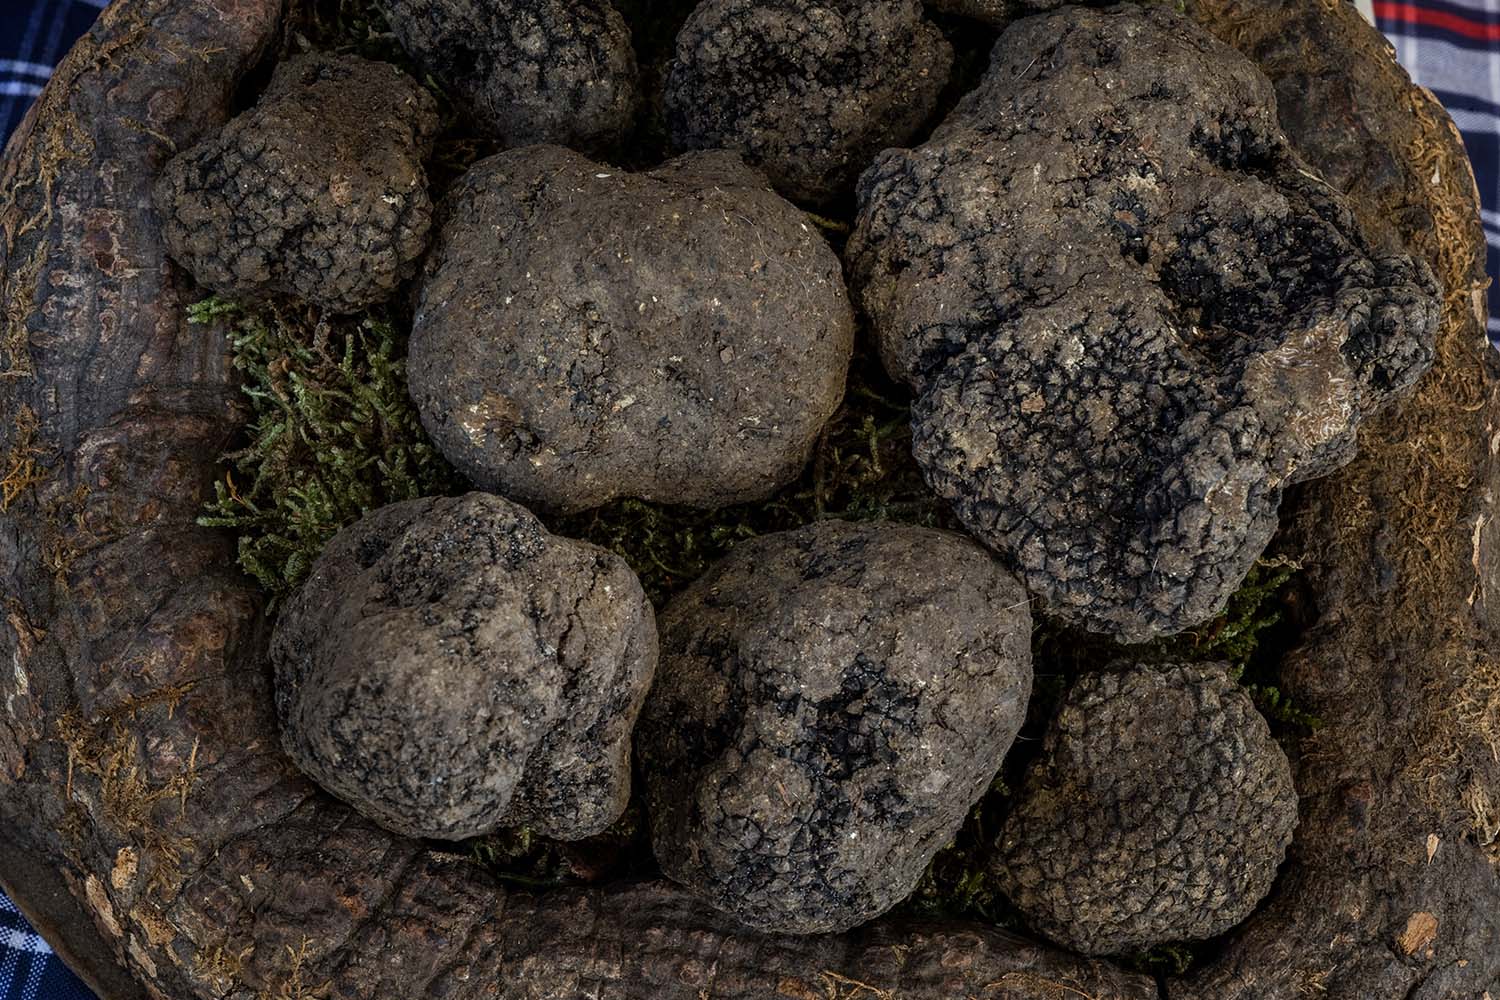 Black truffles at a street market